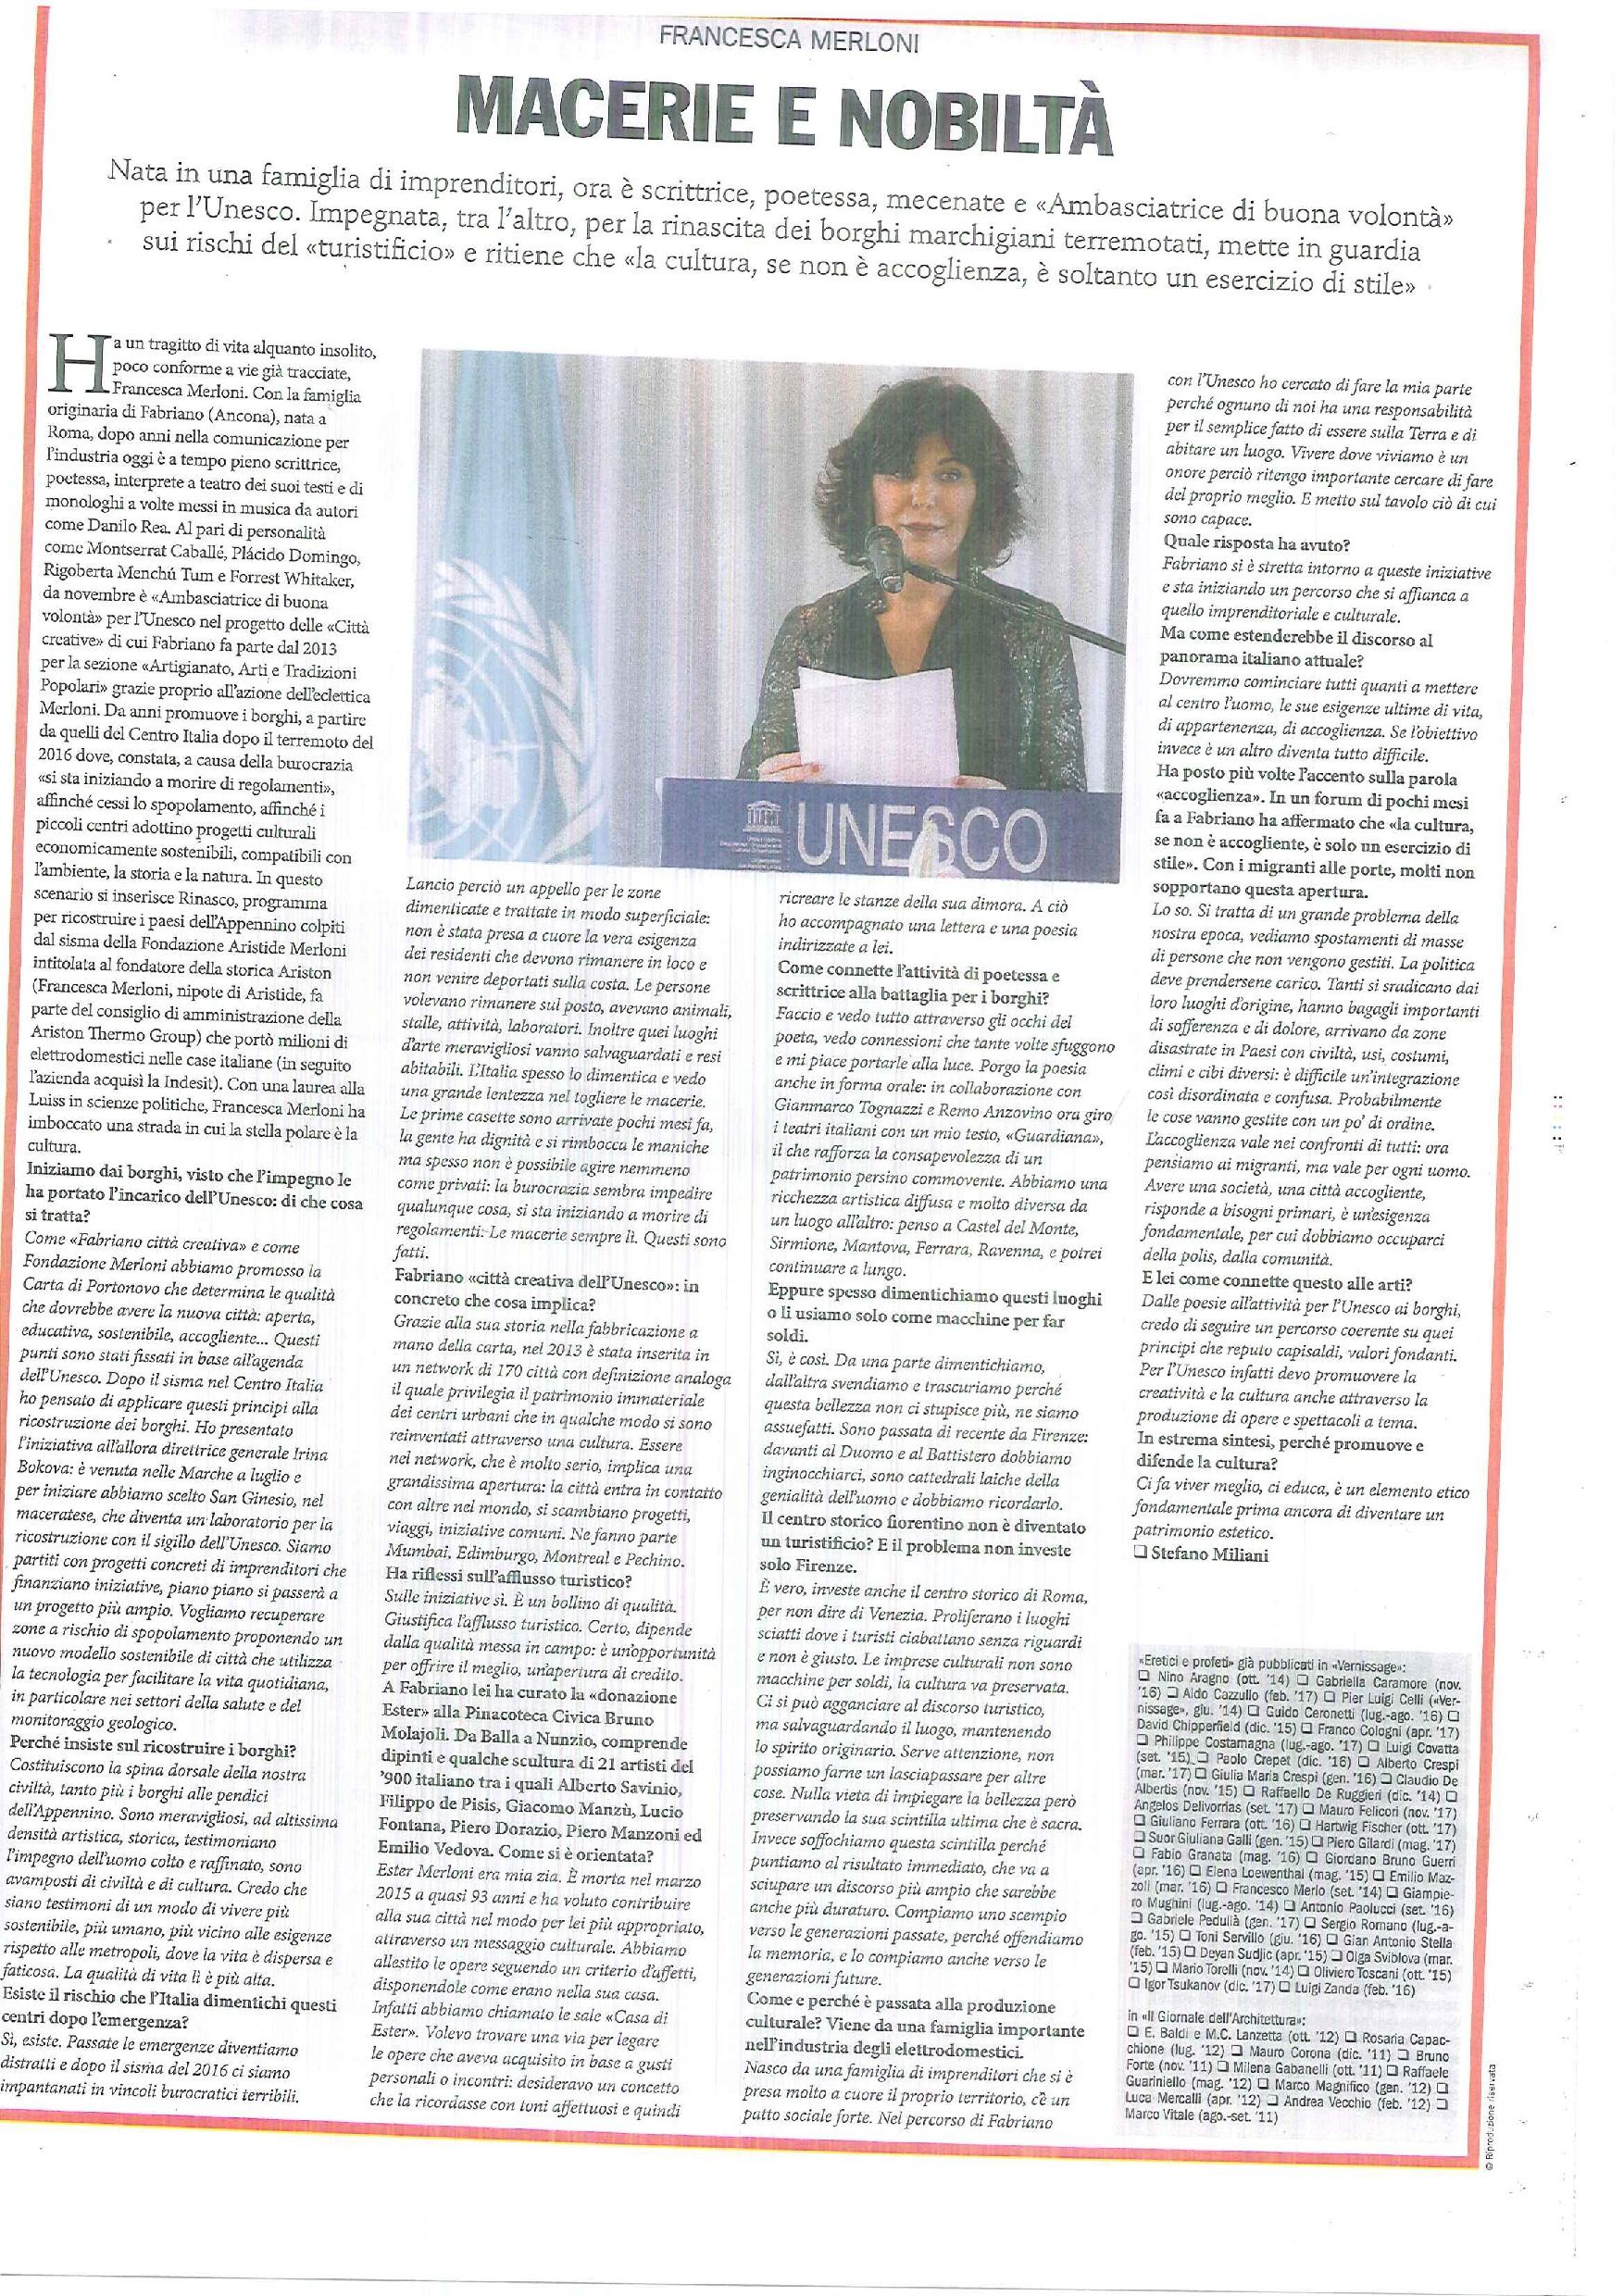 Francesca Merloni intervista Ambassador UNESCO arte